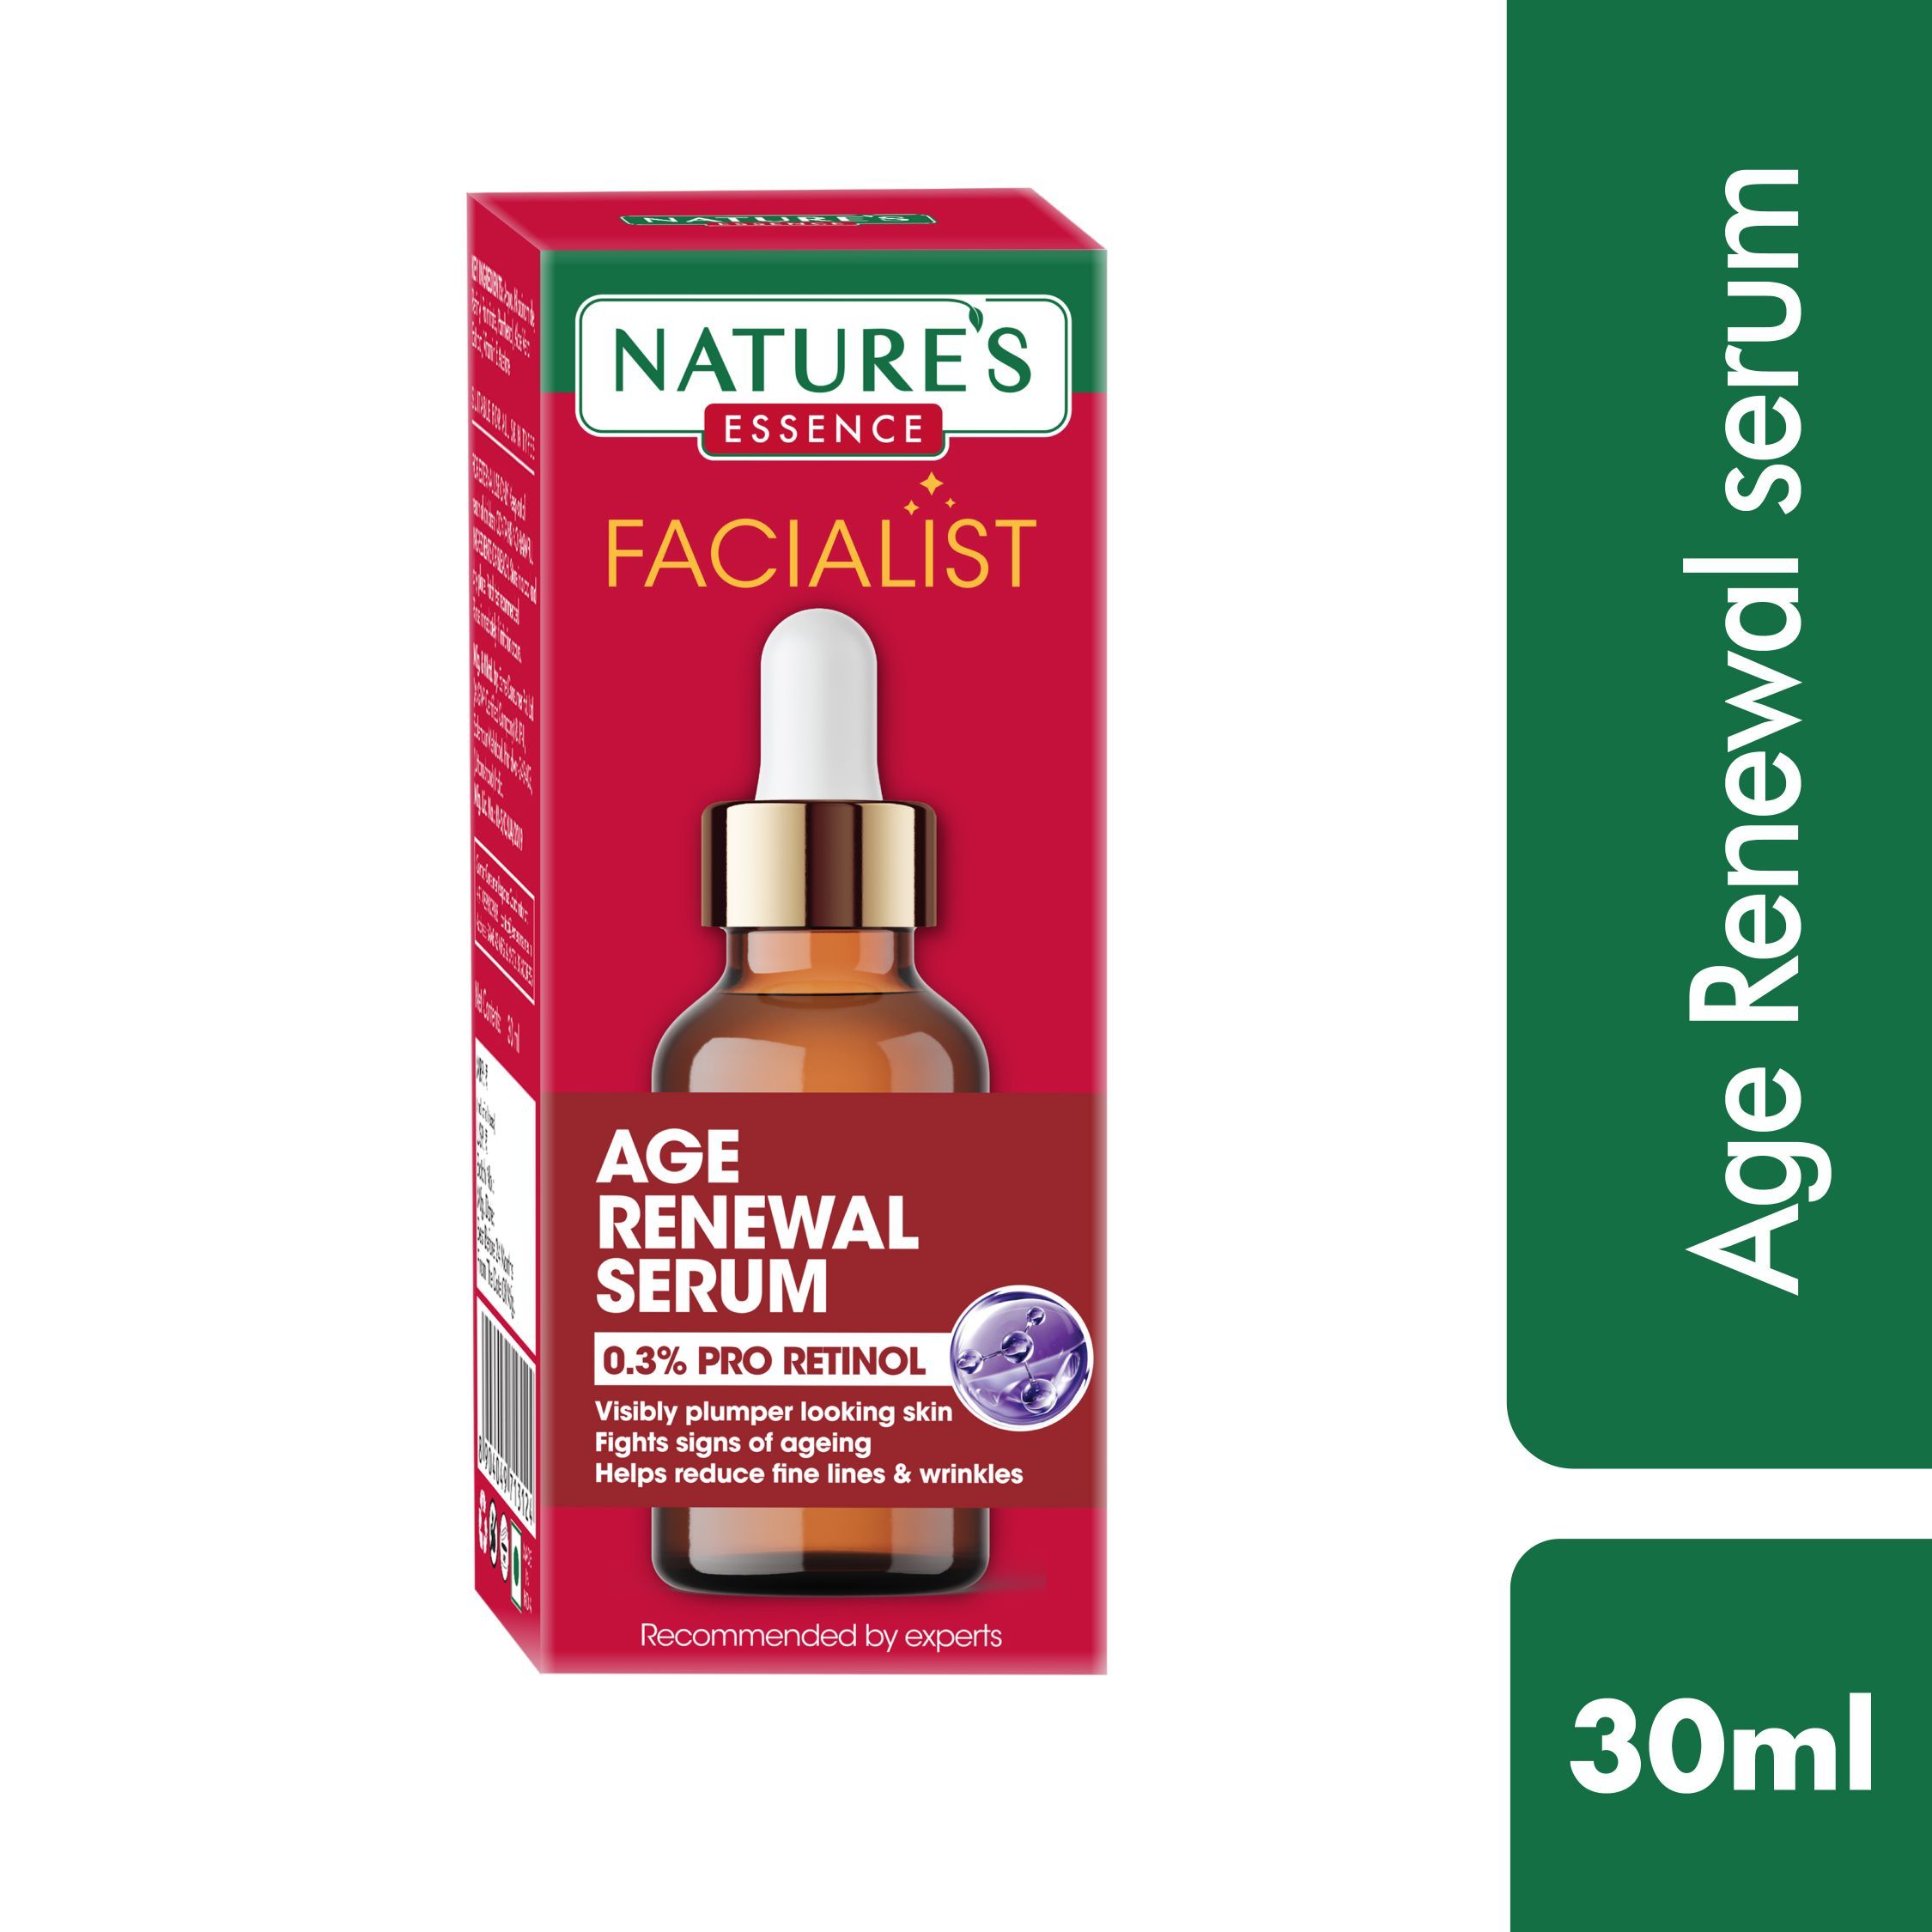 Nature's Essence Age Renewal Serum with 0.3% Pro Retinol